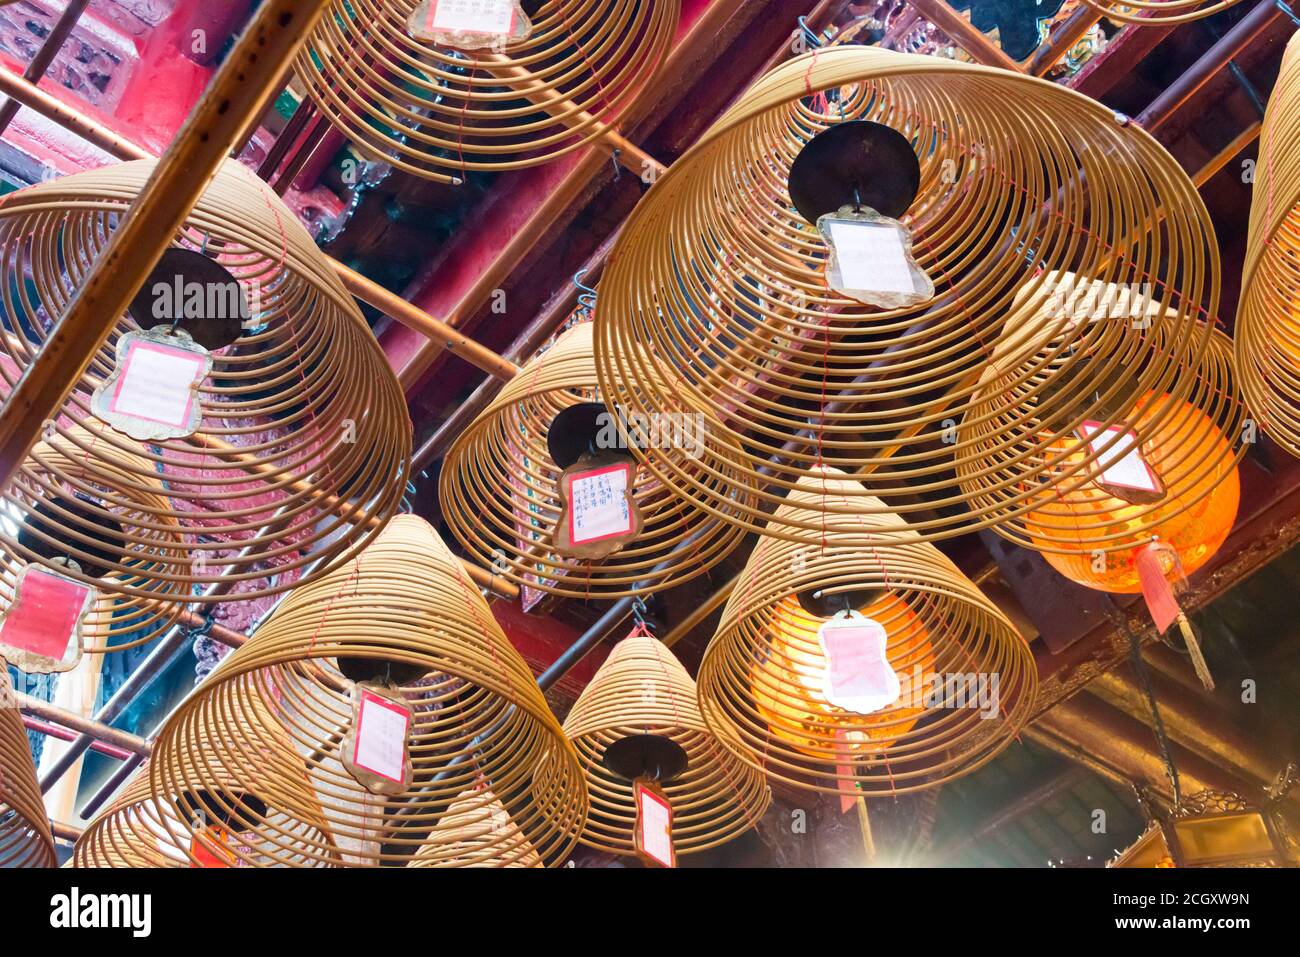 Sheung Wan, Hong Kong - Circular incenses at Man Mo Temple in Sheung Wan, Hong Kong. a famous Tourist spot. Stock Photo